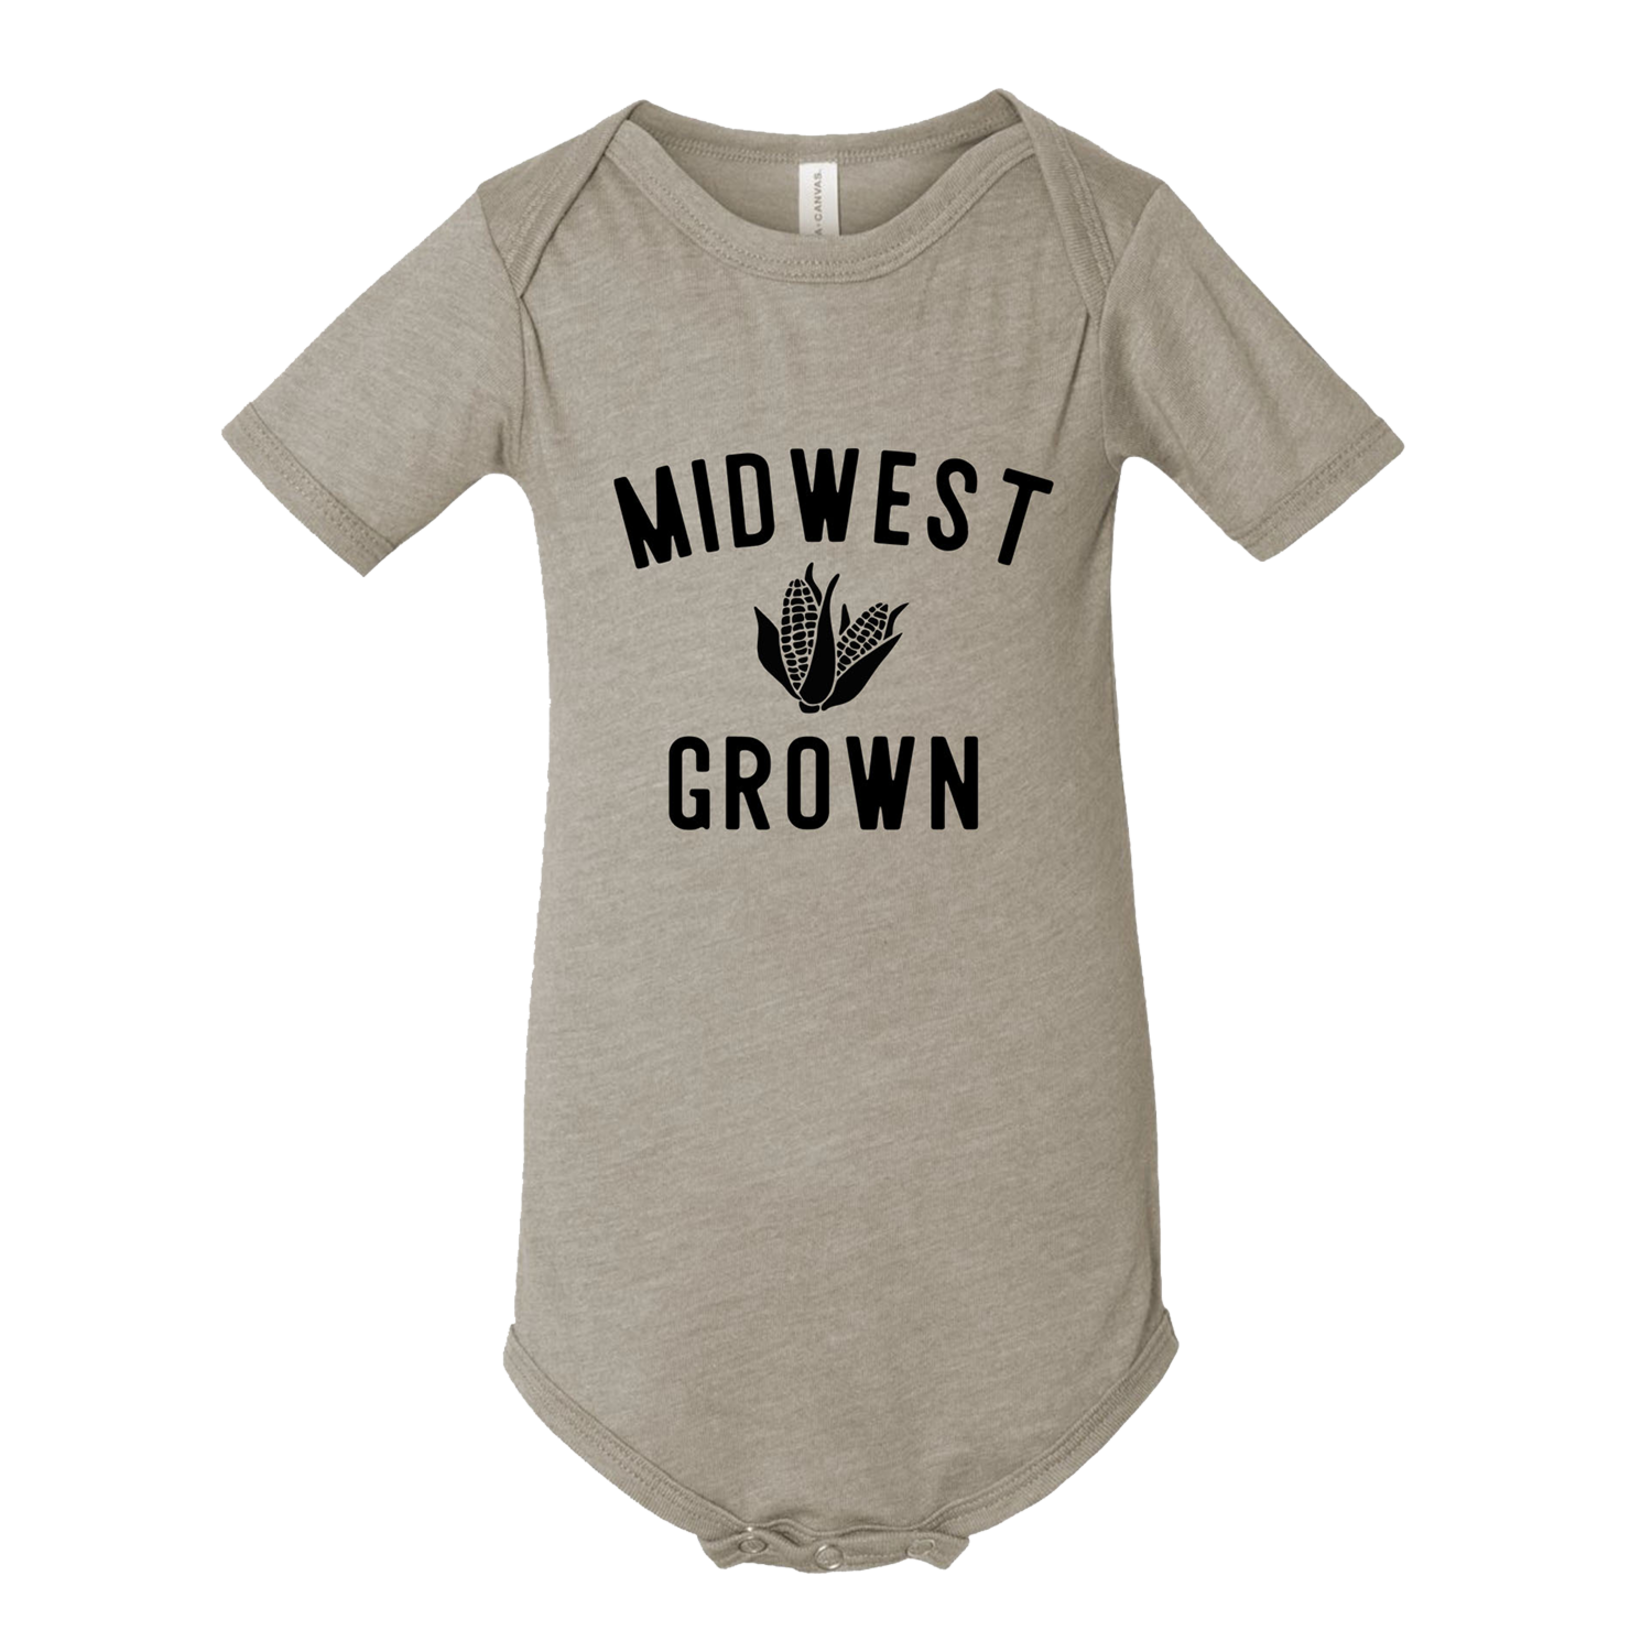 ‘Midwest Grown’ Child’s Tee & Onesie